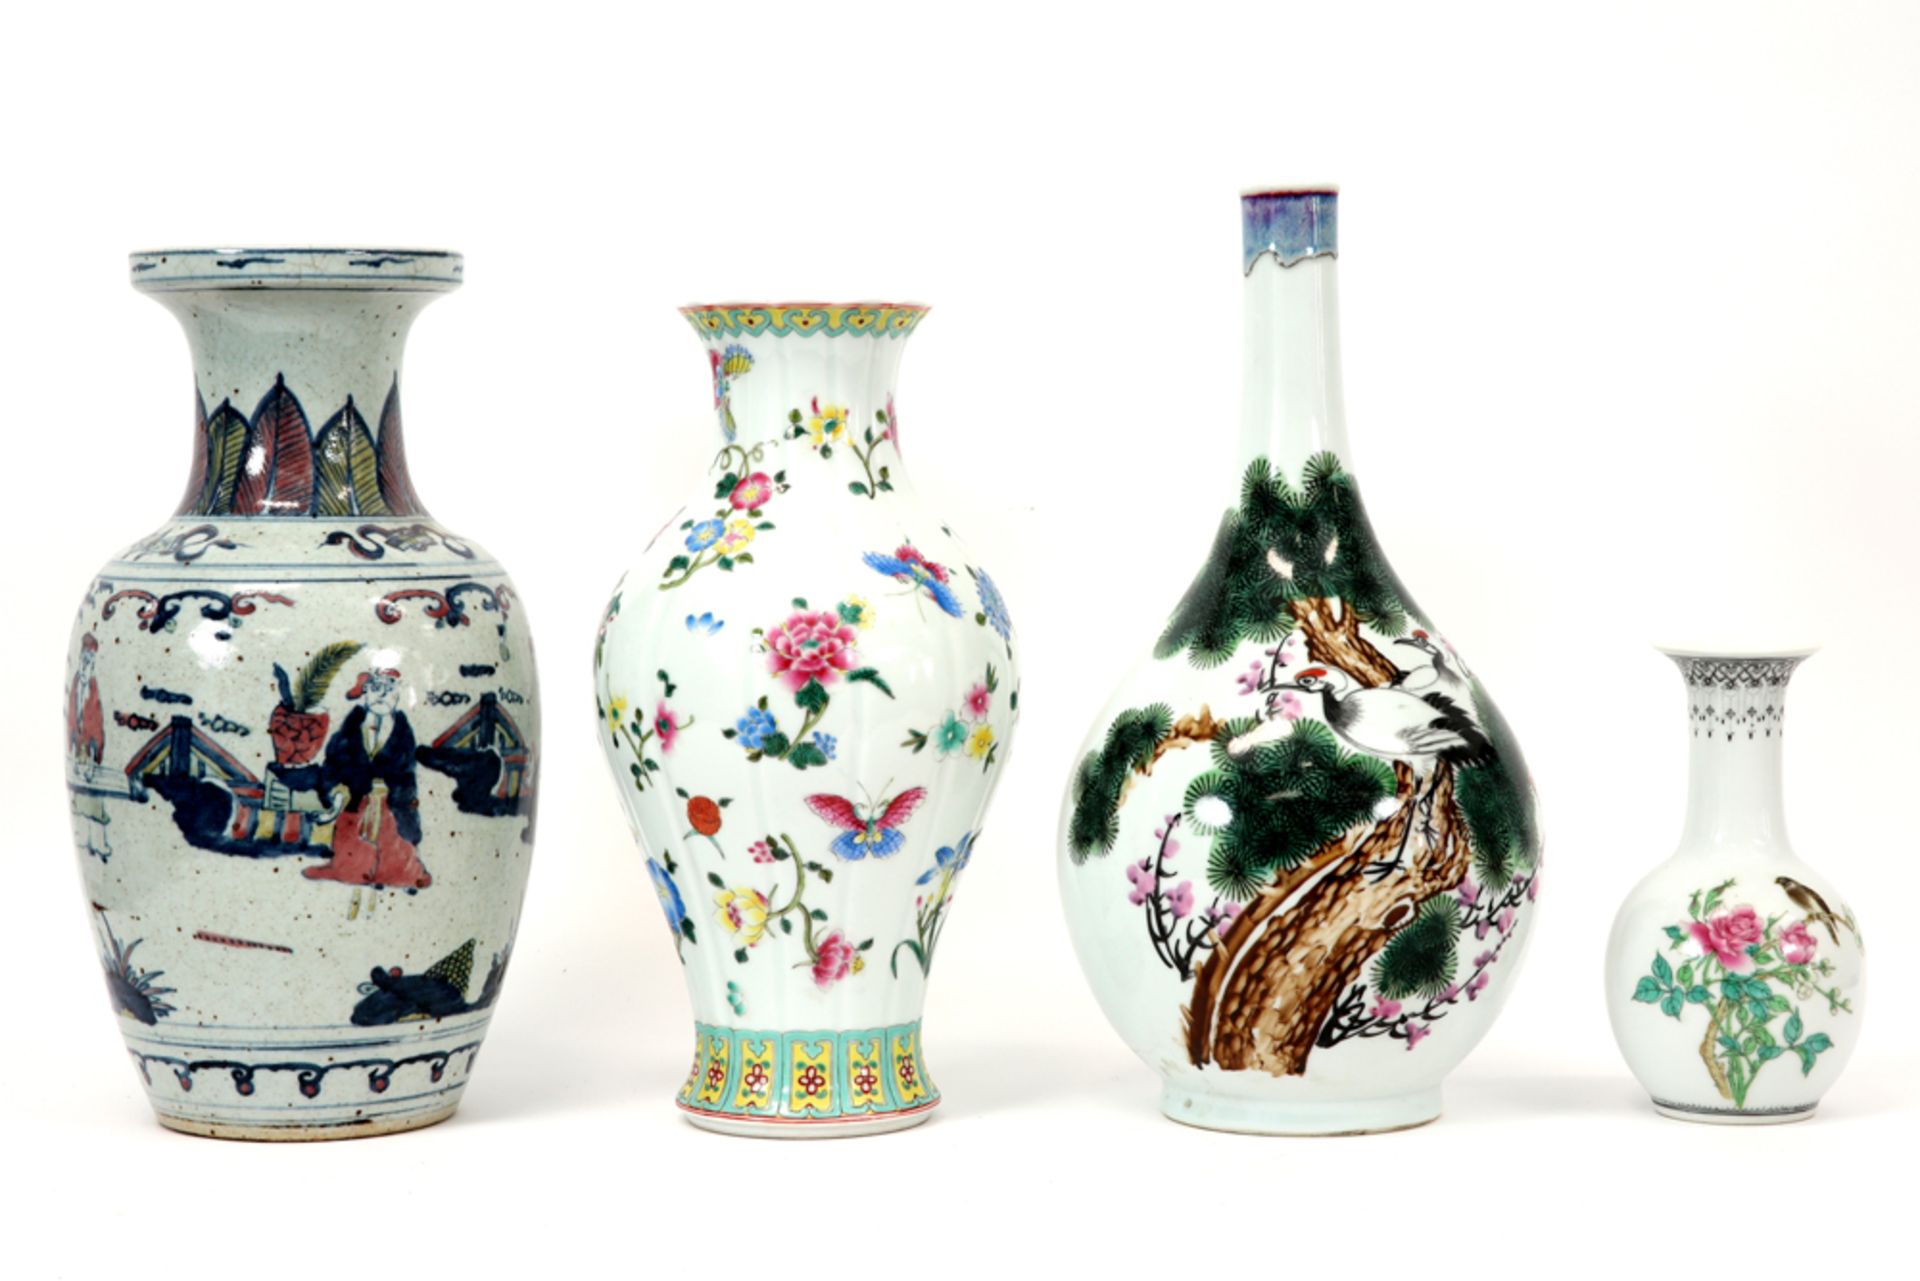 four Chinese vases in porcelain ||Lot van vier Chinese vazen in porselein met polychroom decor -